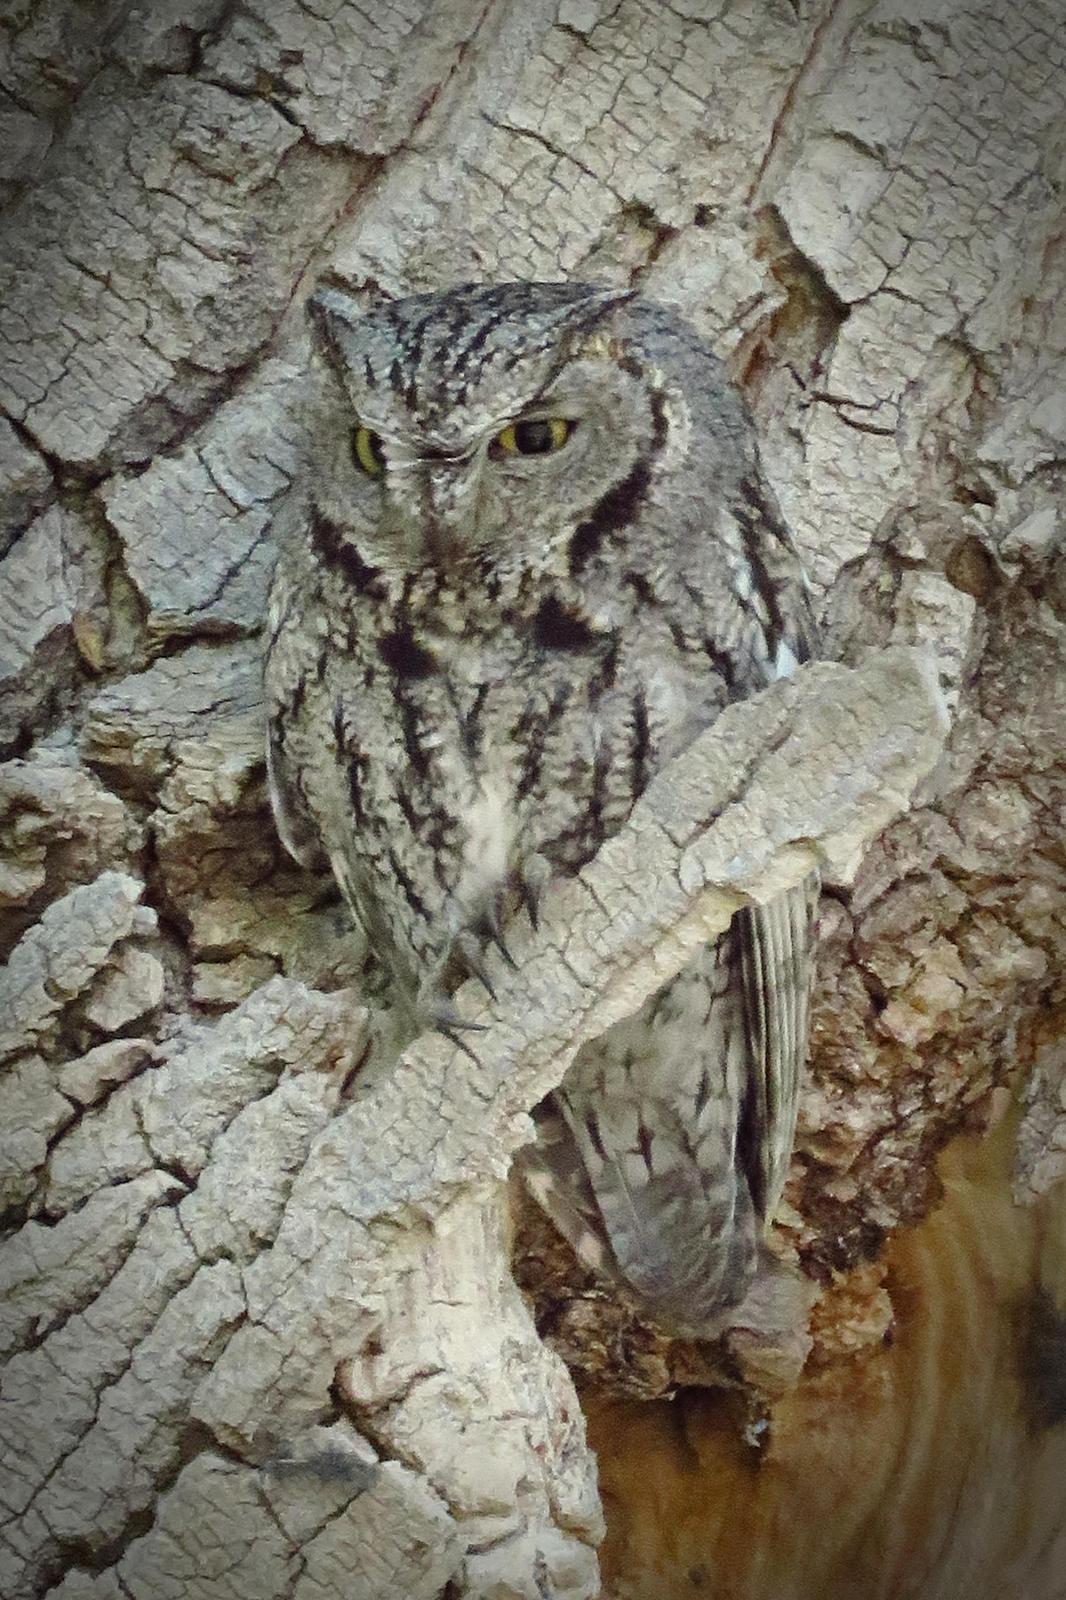 Western Screech-Owl Photo by Bob Neugebauer